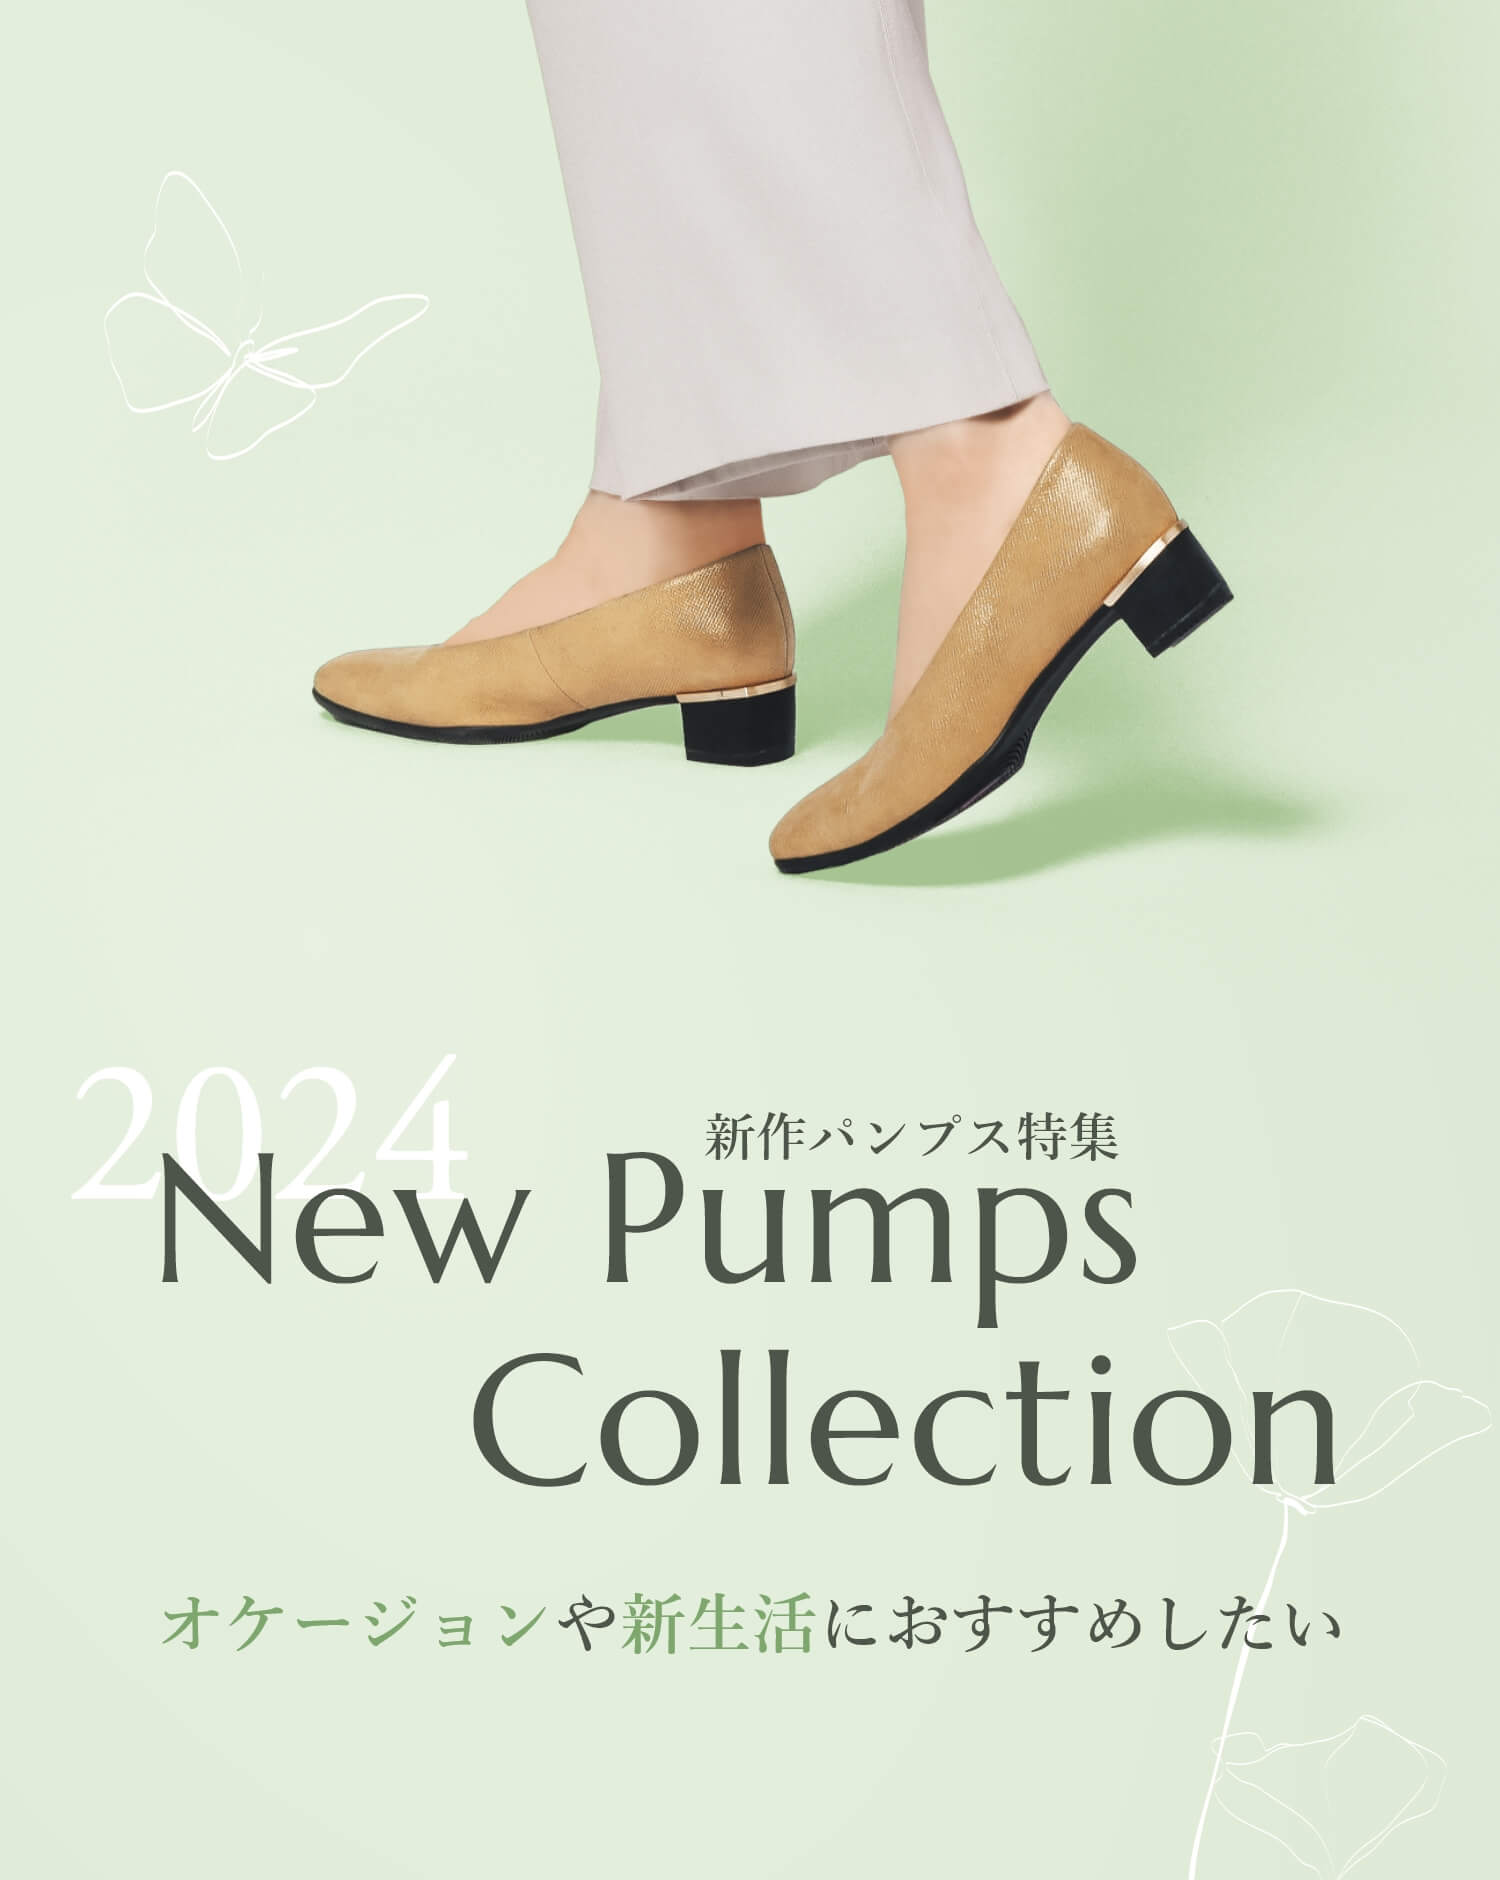 2024 New Pumps Collection 新作パンプス特集 オケージョンや新生活におすすめしたい